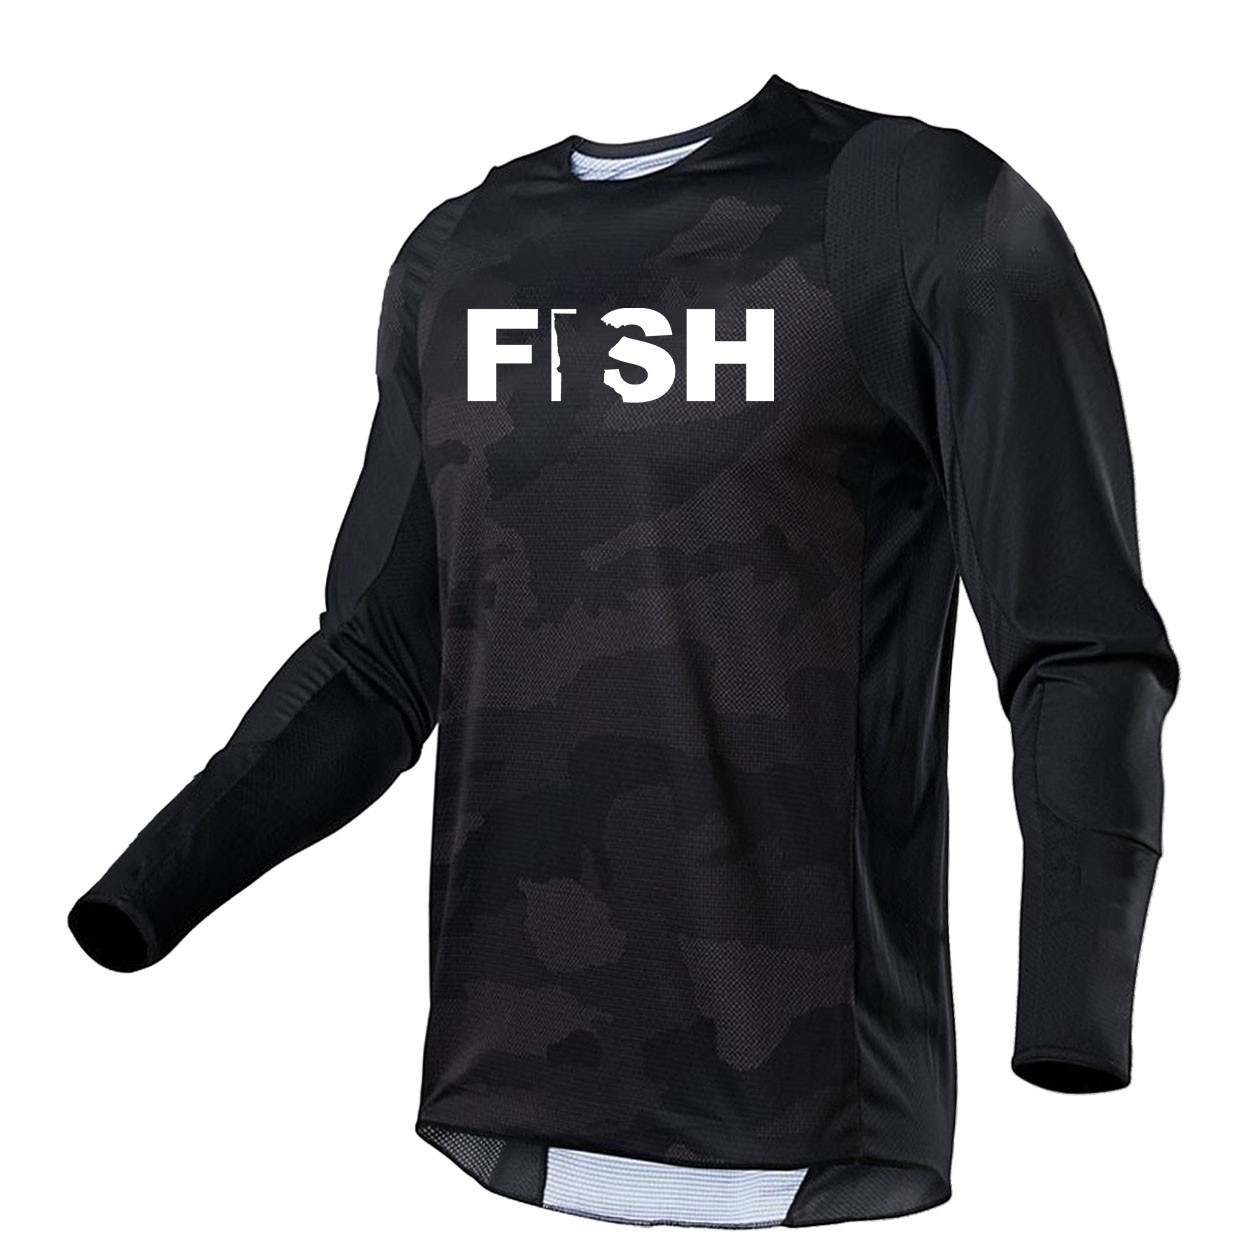 Fish Minnesota Classic Performance Jersey Long Sleeve Shirt Black Camo